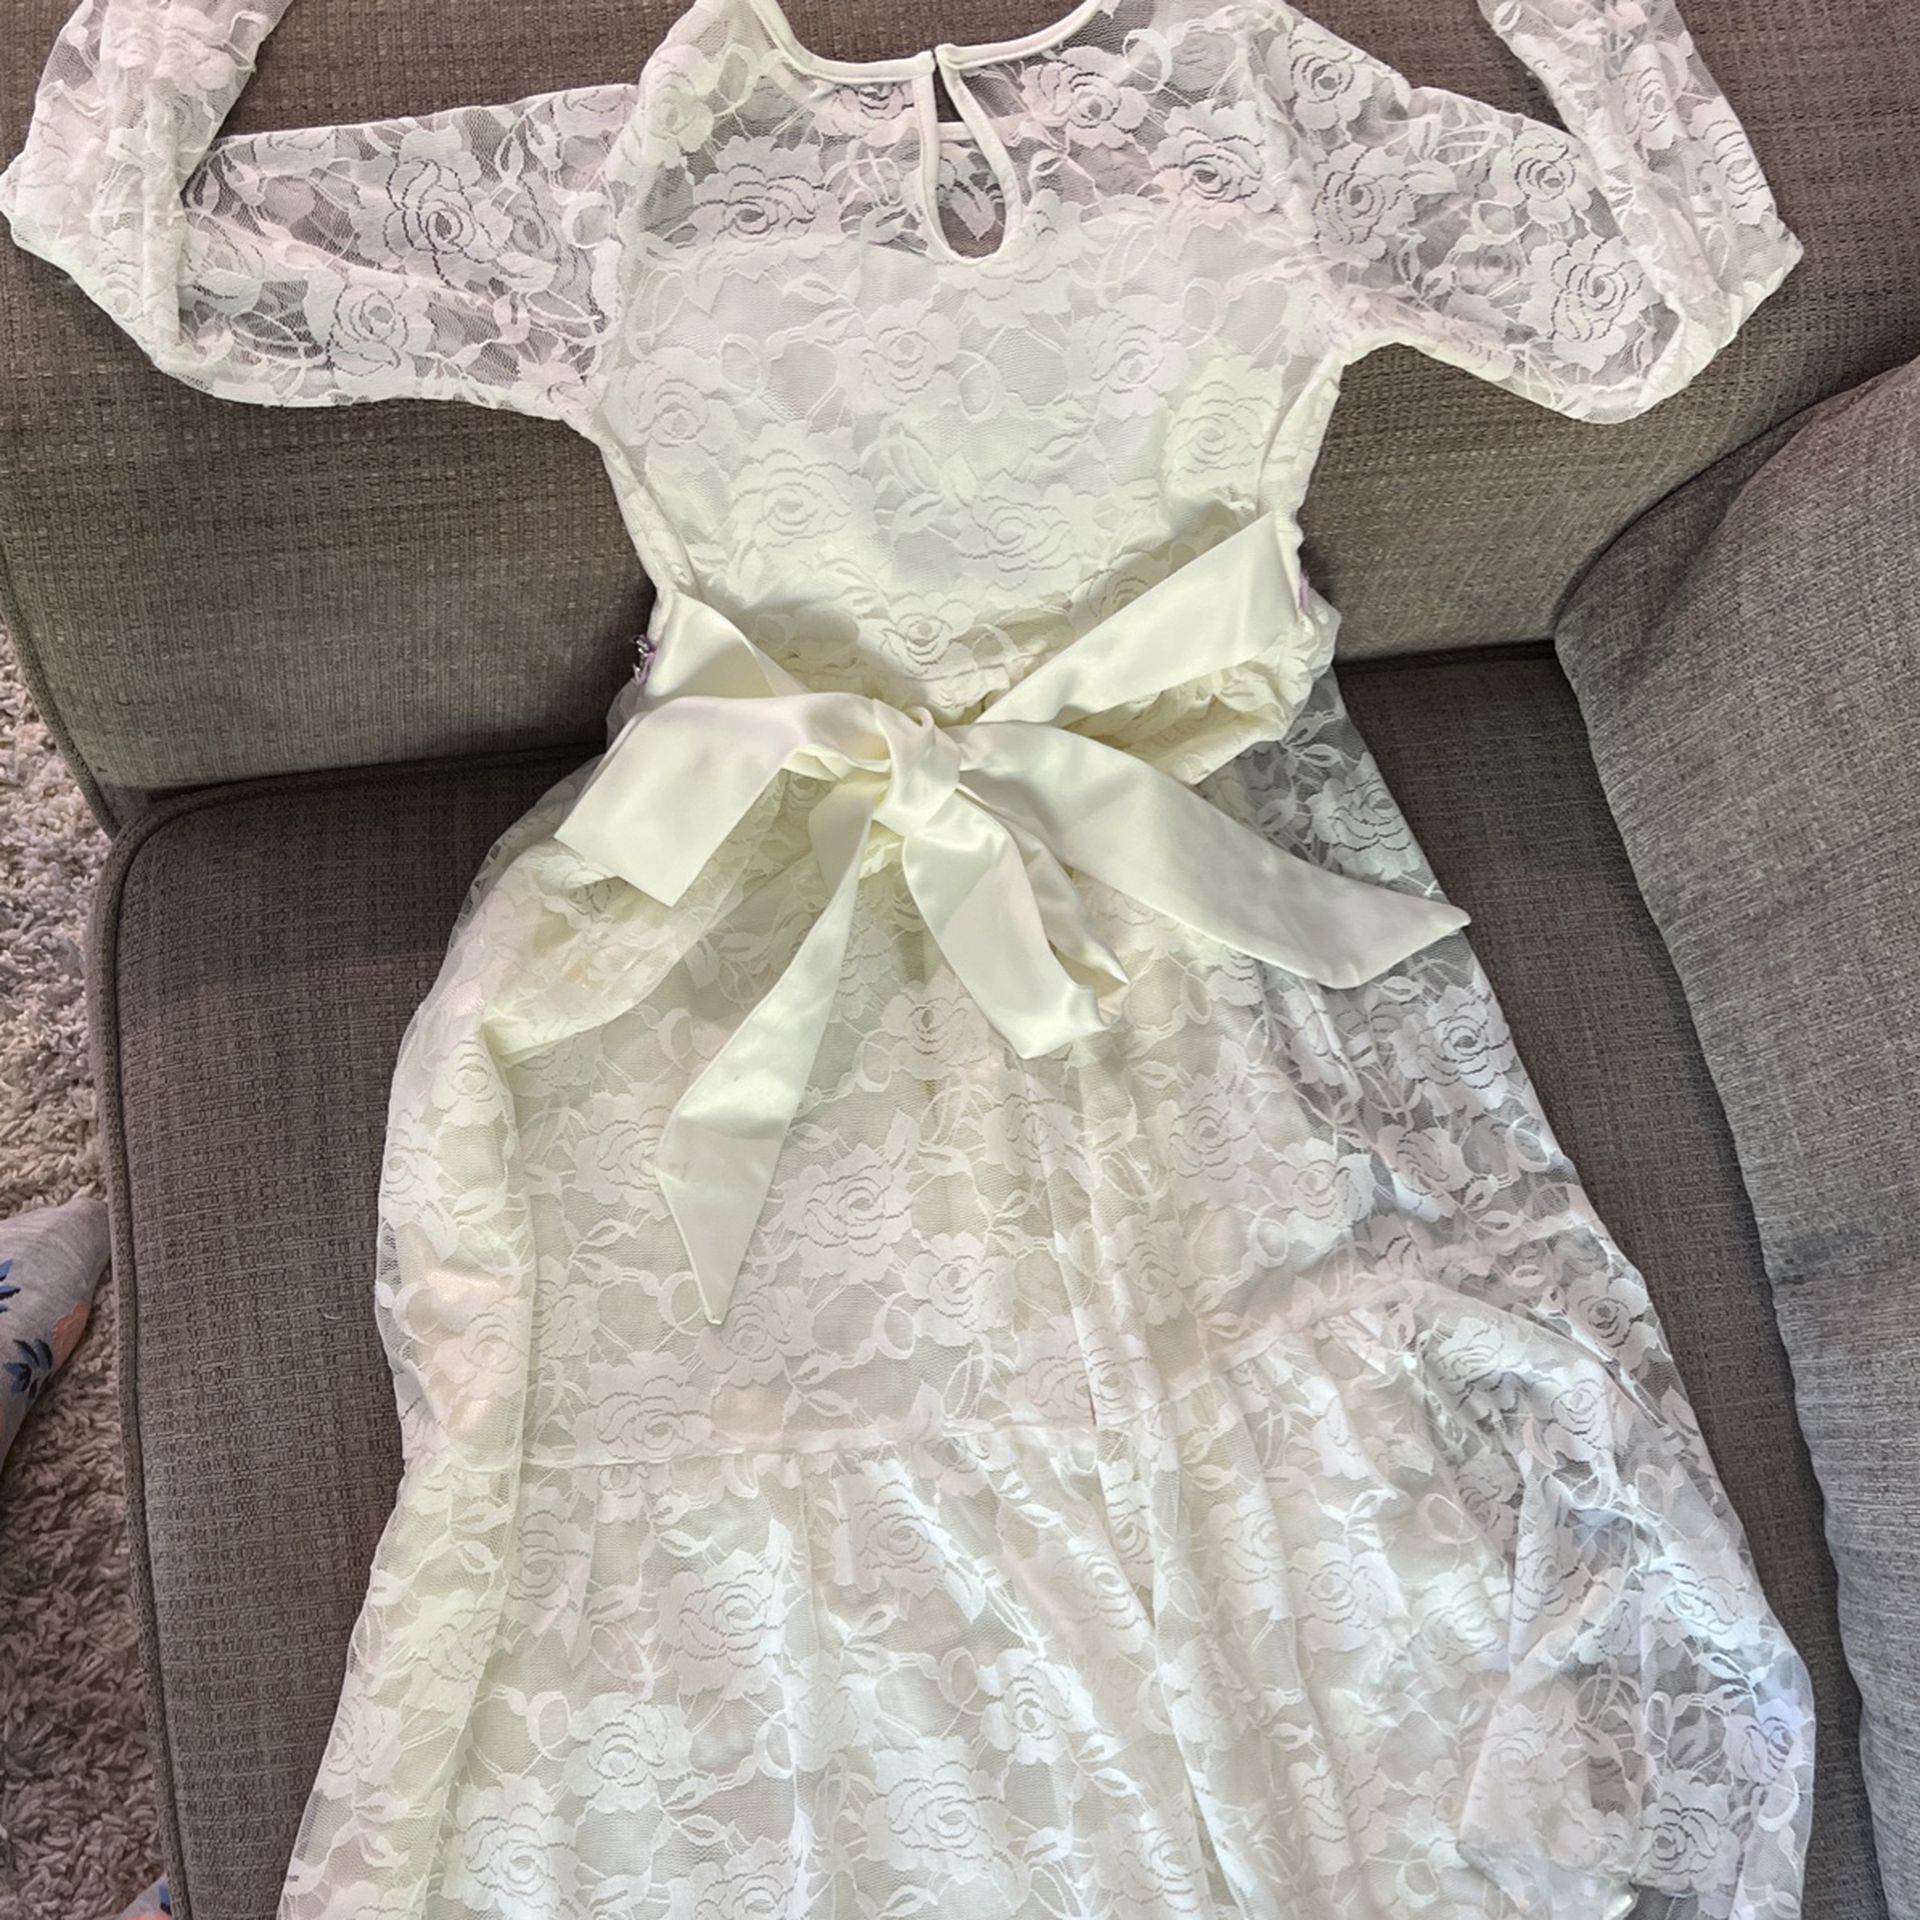 Kids Flower Girl Lace Wedding Dress - Size 5/6 - 0ff White - New 